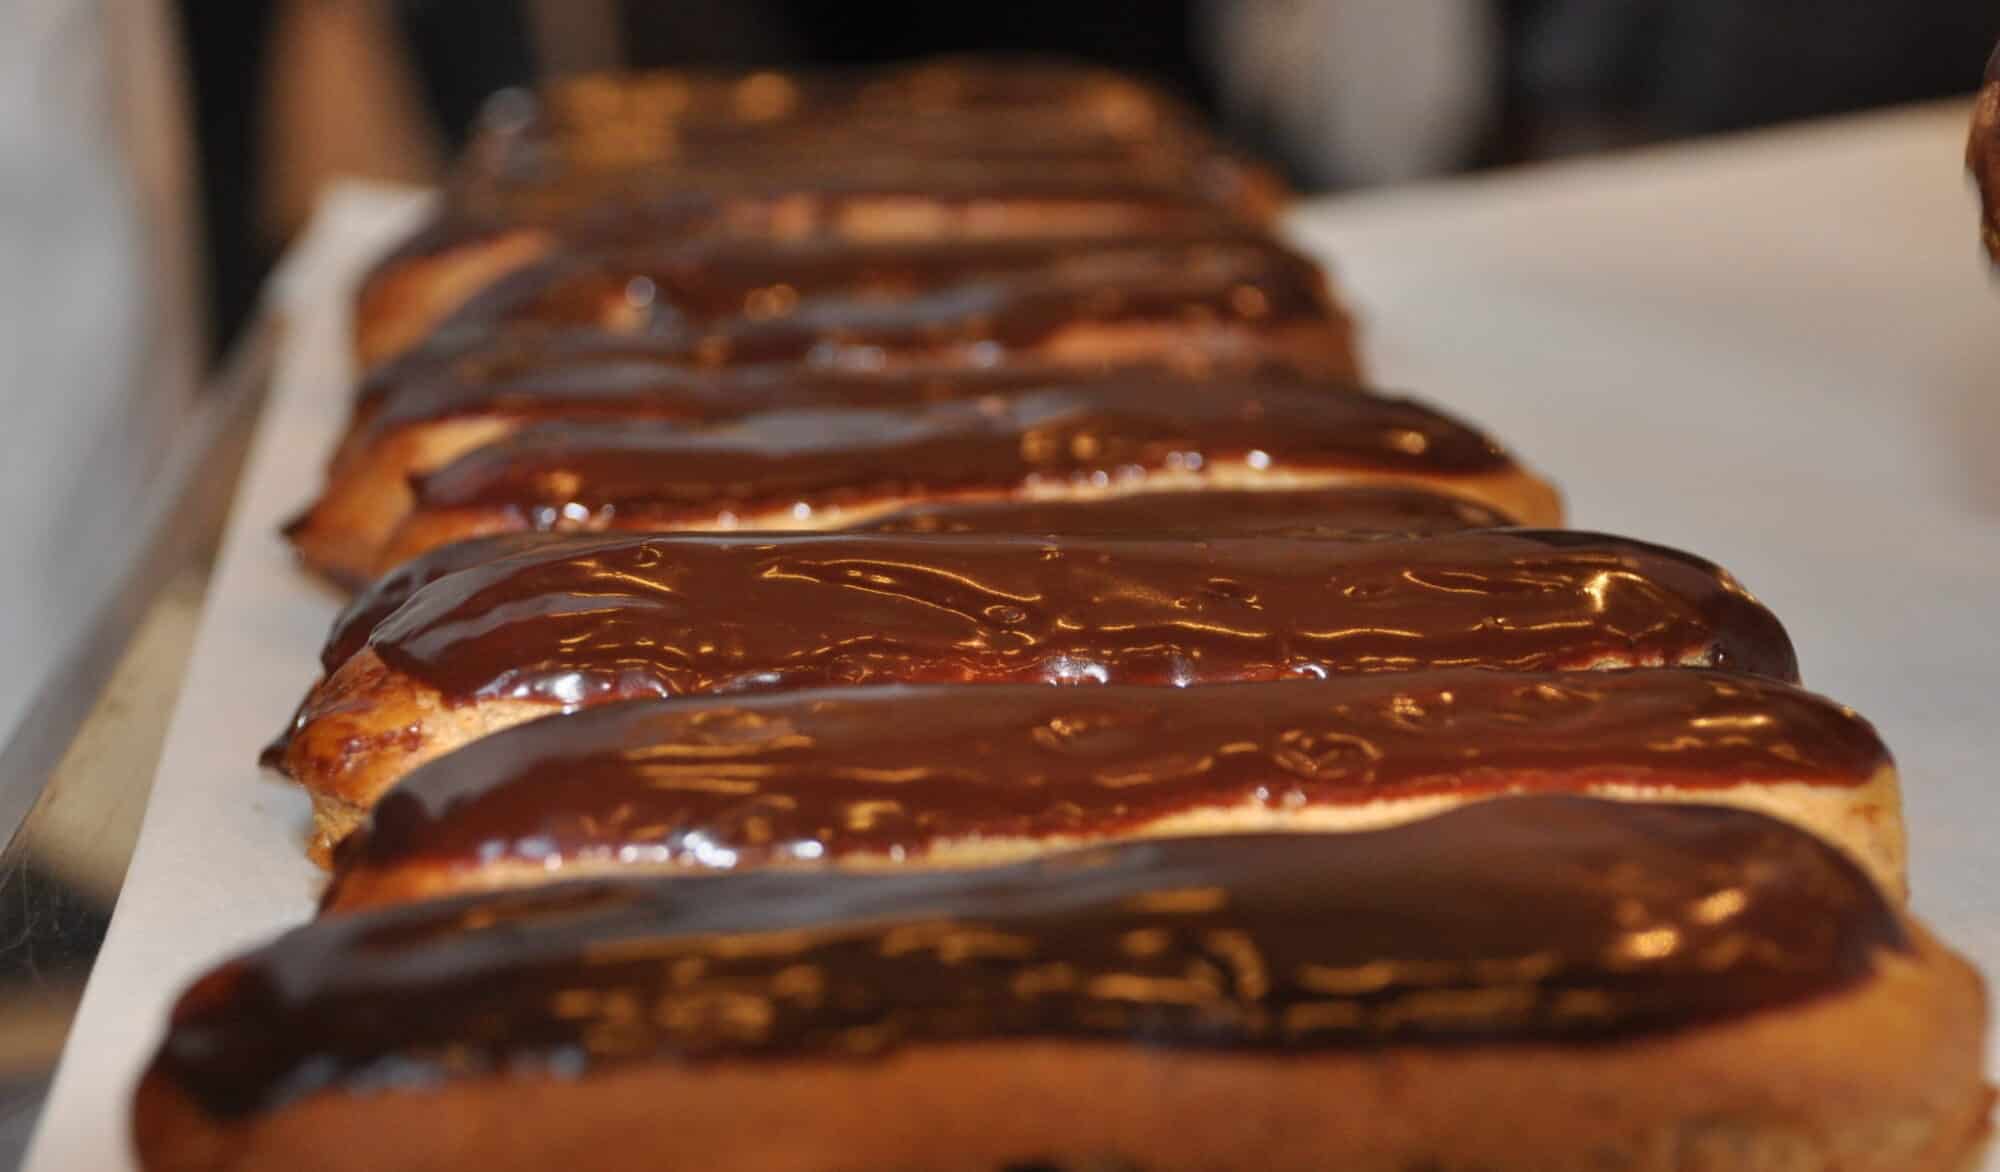 A row of chocolate eclairs at the Salon du Chocolat fair.